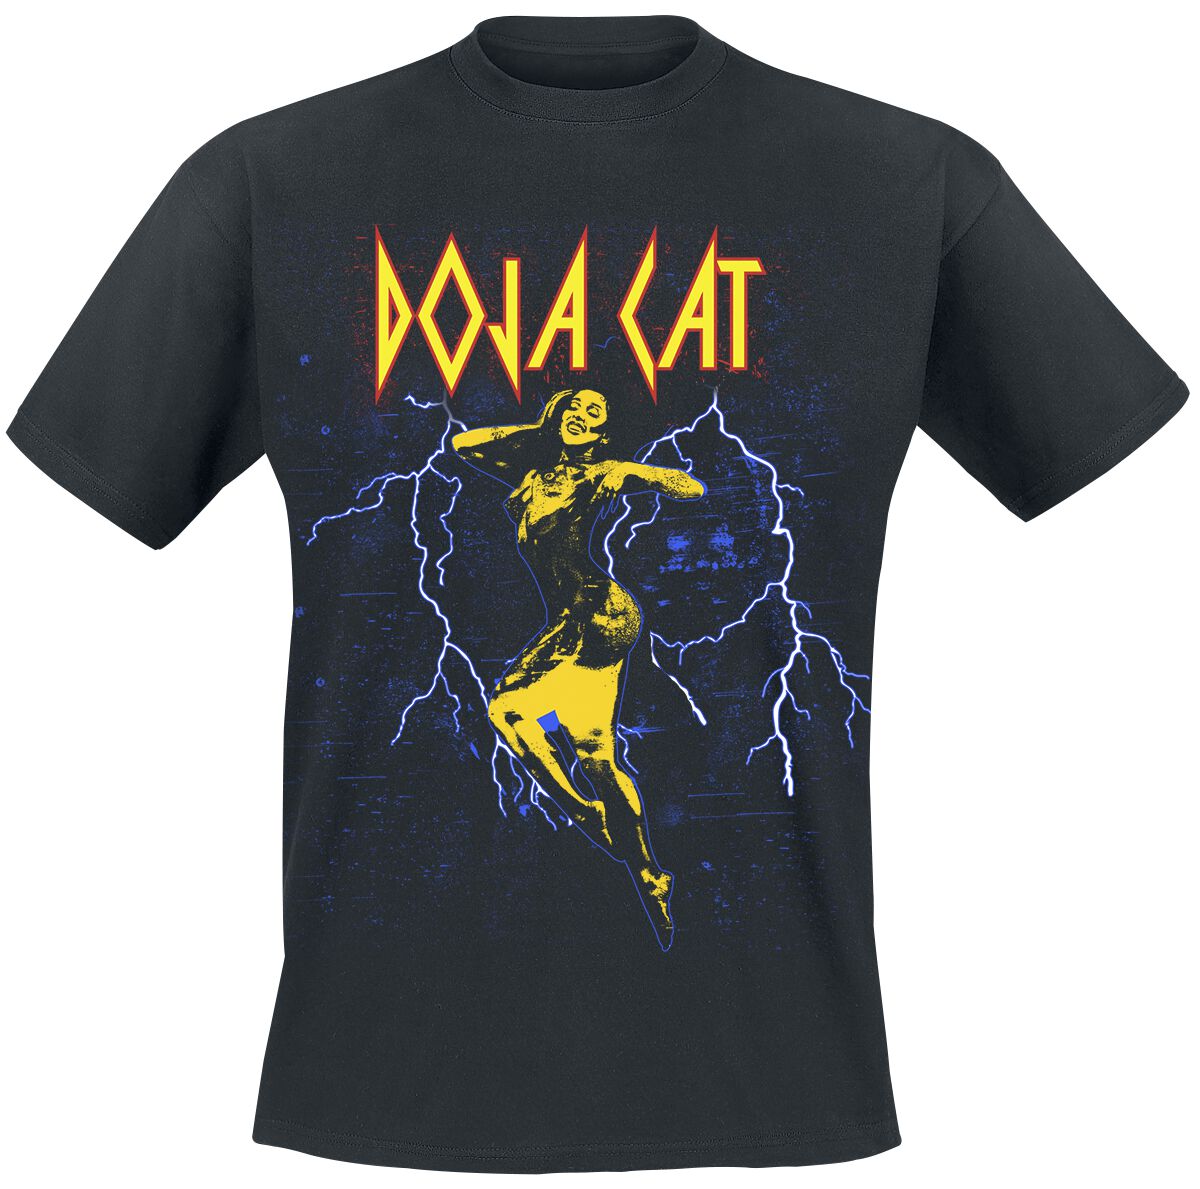 doja cat t-shirt - planet her lightning - s bis xxl - fÃ¼r mÃ¤nner - grÃ¶ÃŸe l - - lizenziertes merchandise! schwarz